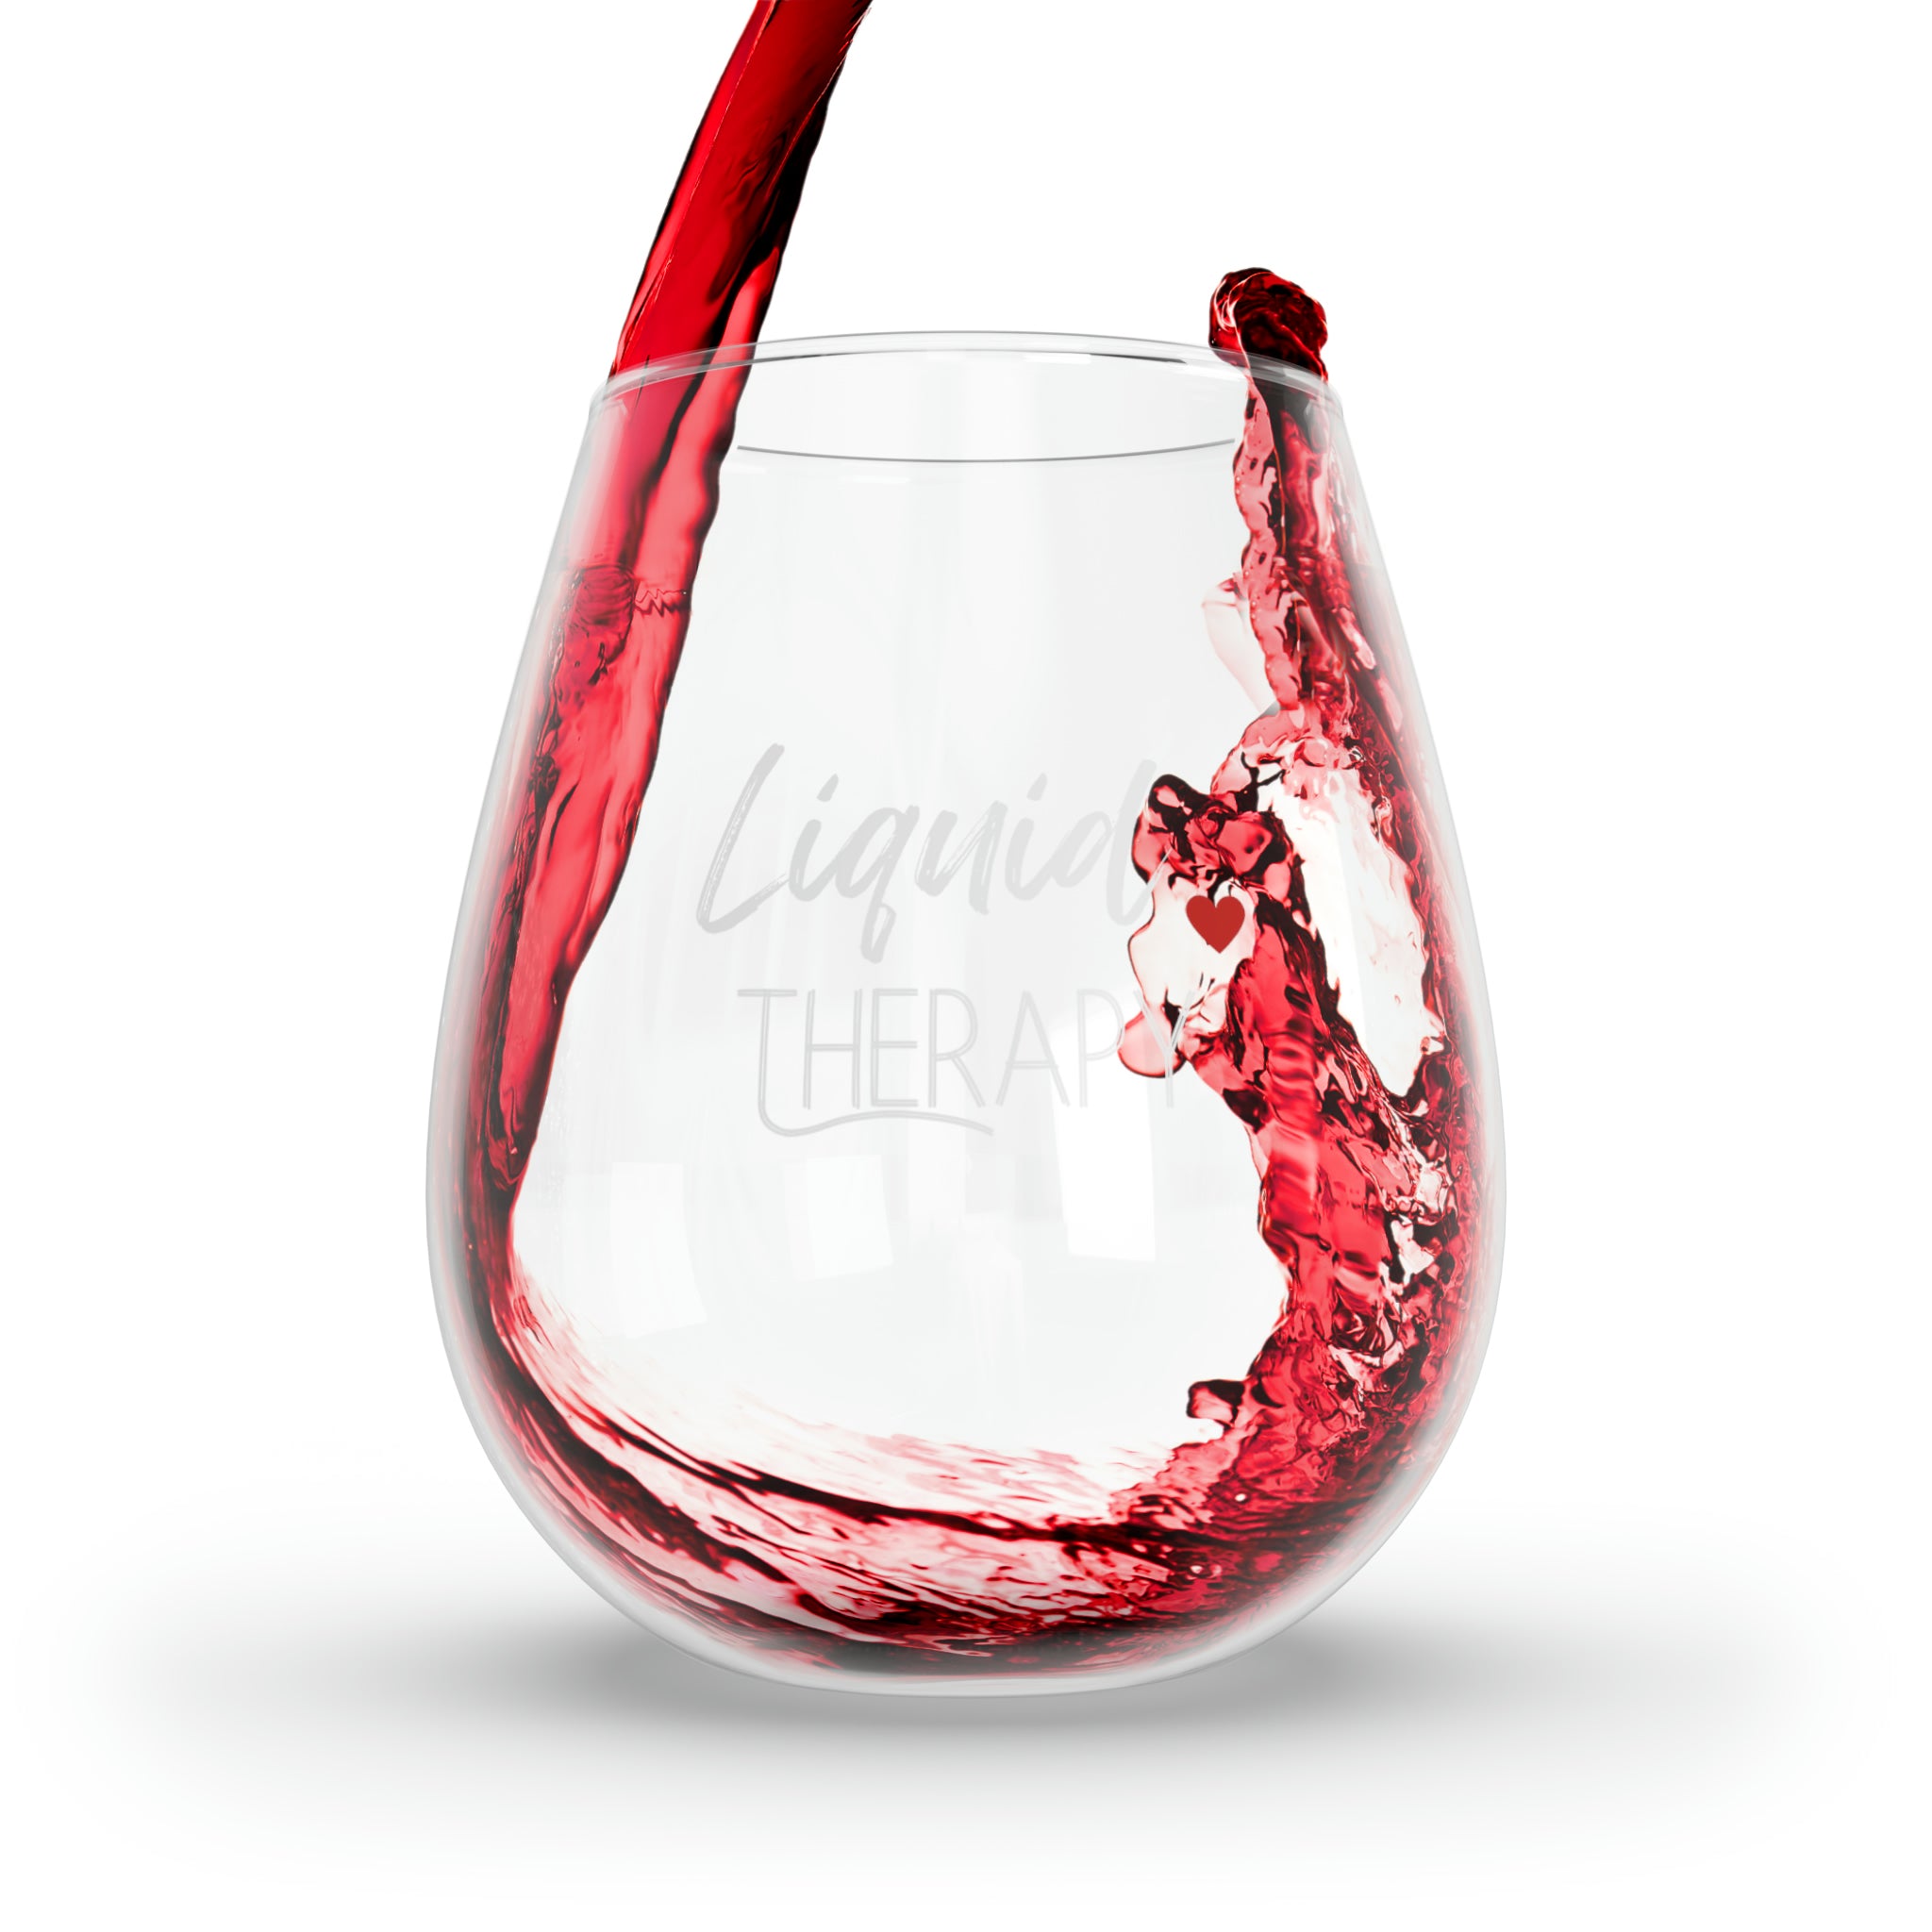 Liquid Therapy - Stemless Wine Glass, 11.75oz